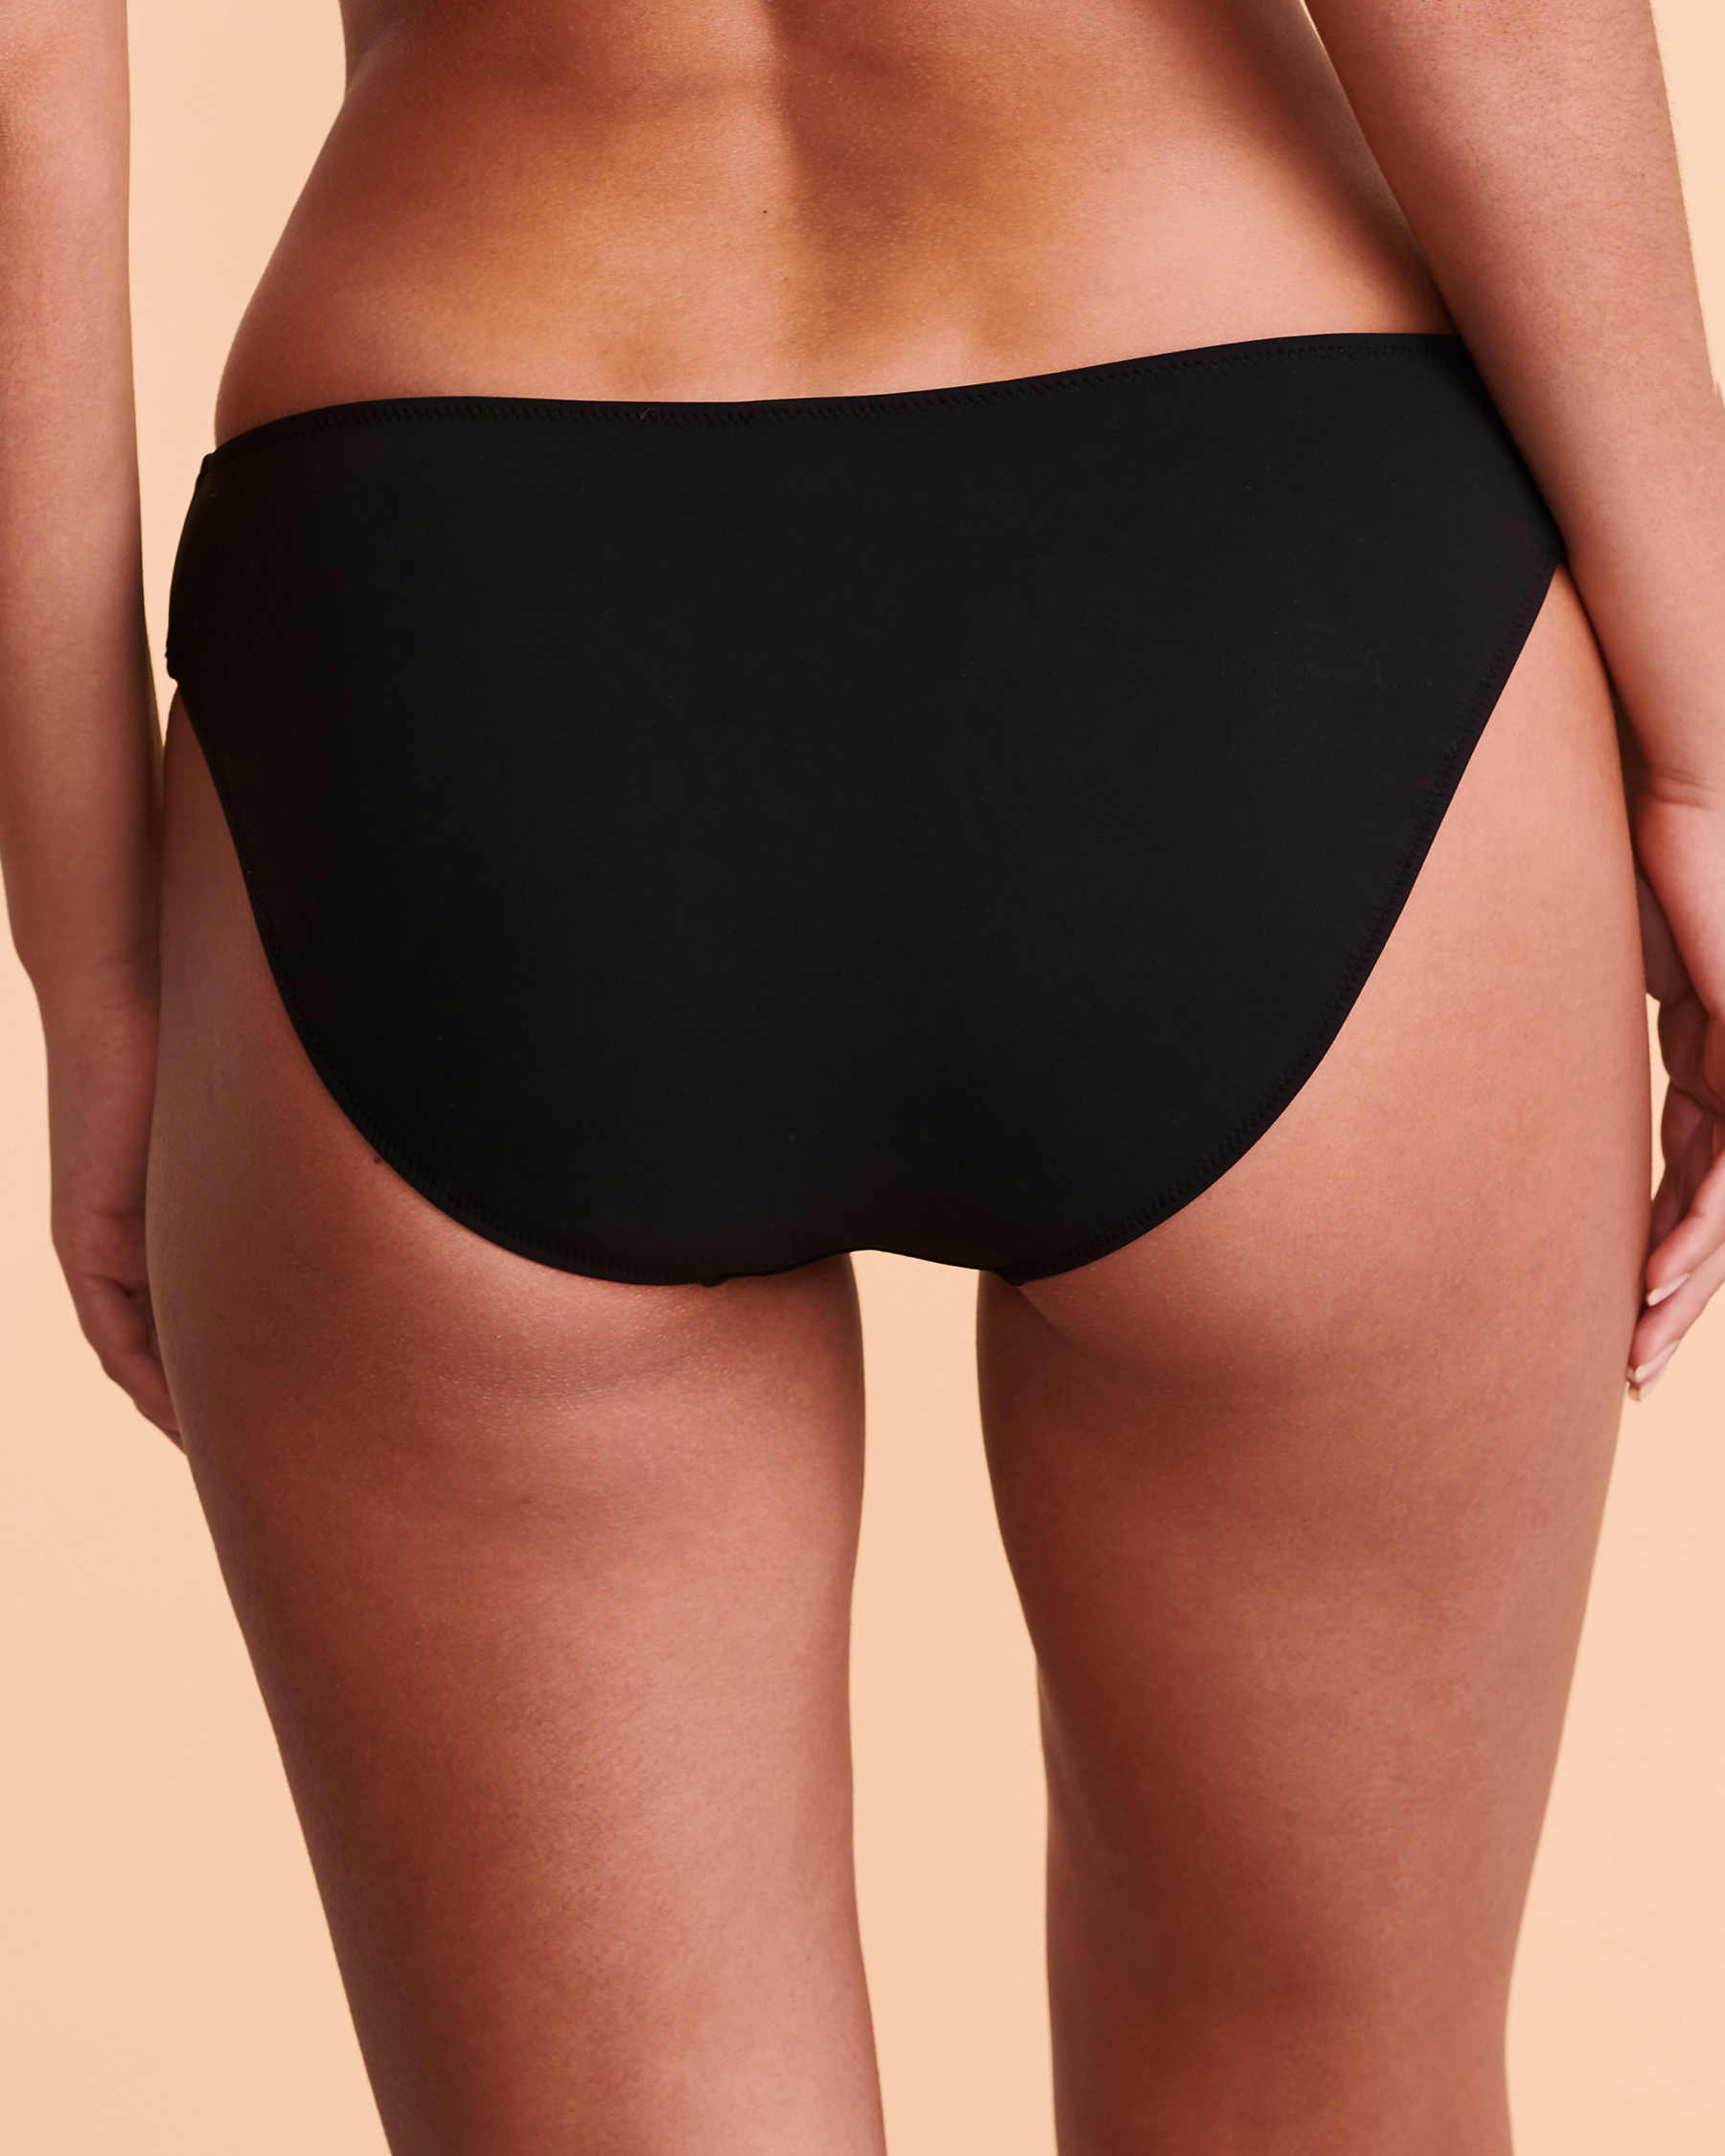 PROFILE TUTTI FRUTTI Gathered Sides Bikini Bottom Black ETT-1P57 - View2